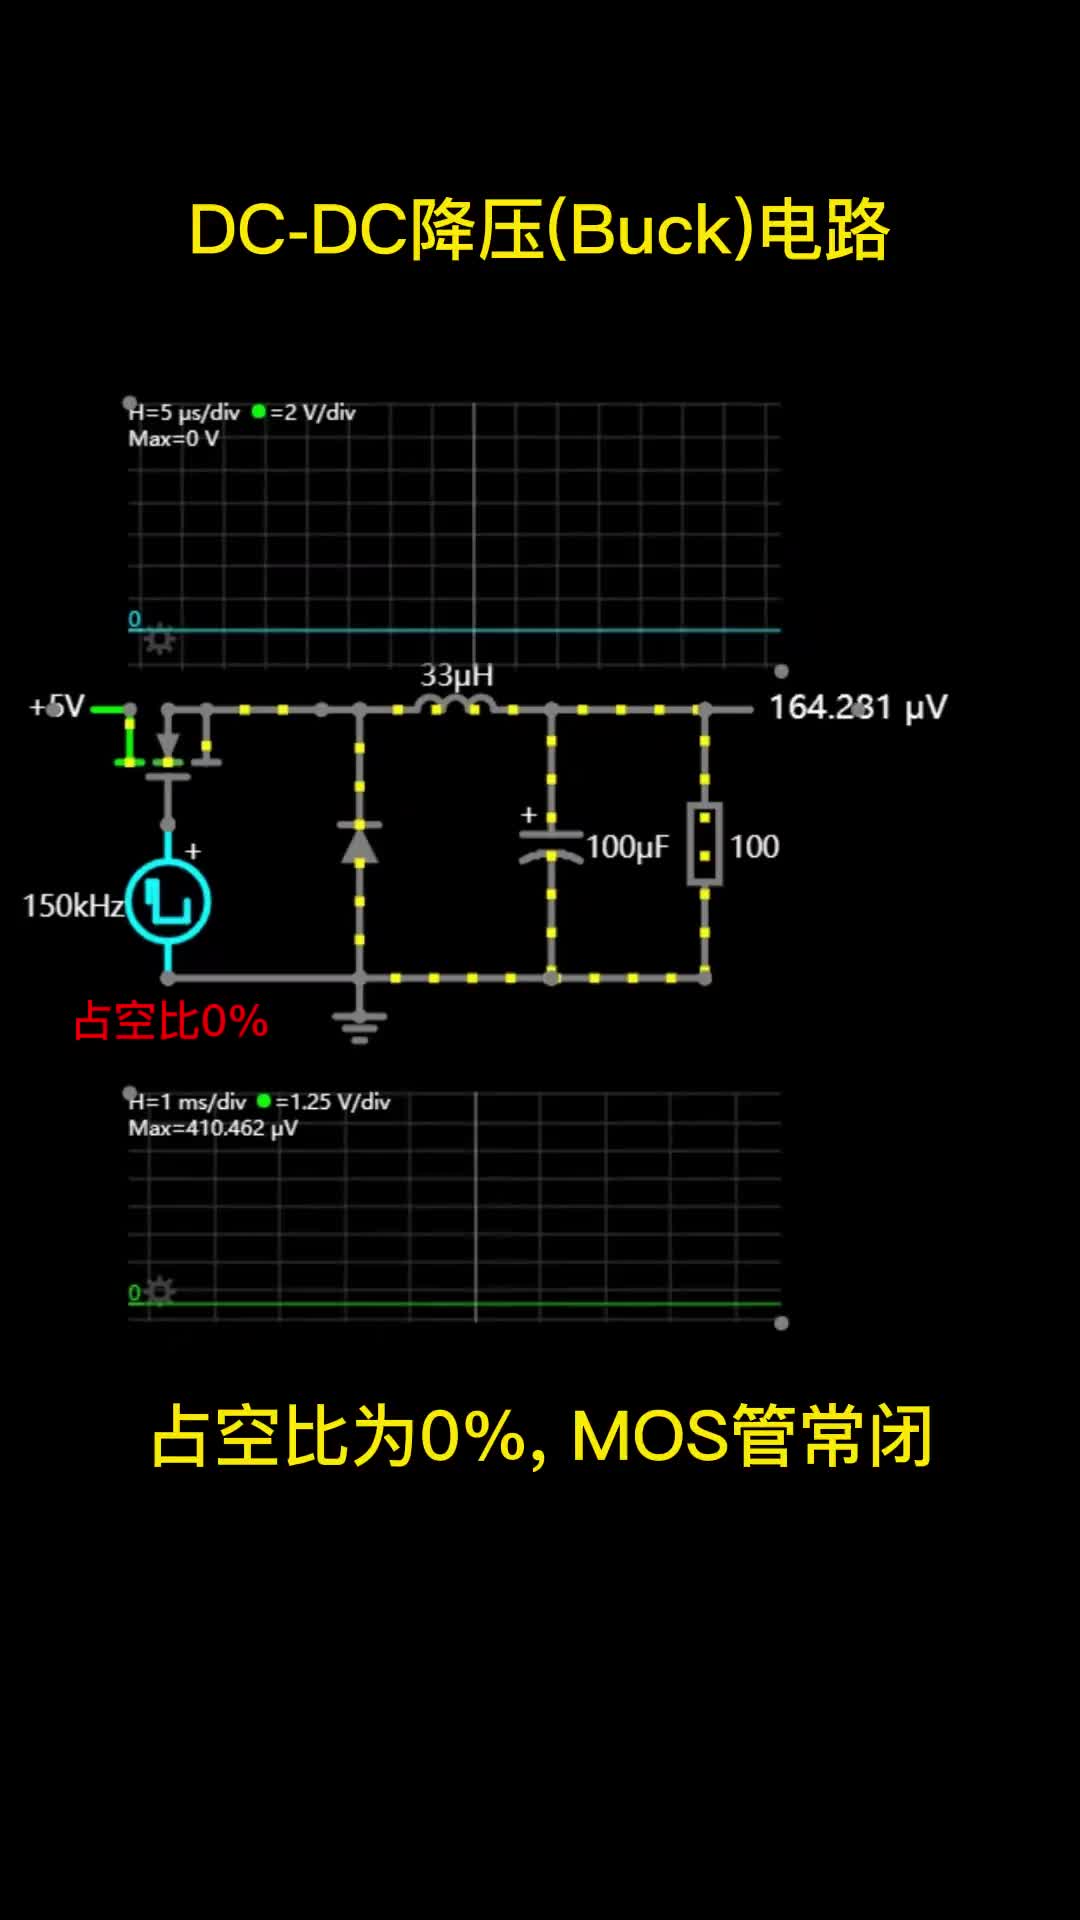 00013 DC-DC降压（Buck）电路，演示MOS管开关控制PWM占空比增加，输出电压的变化过程, 